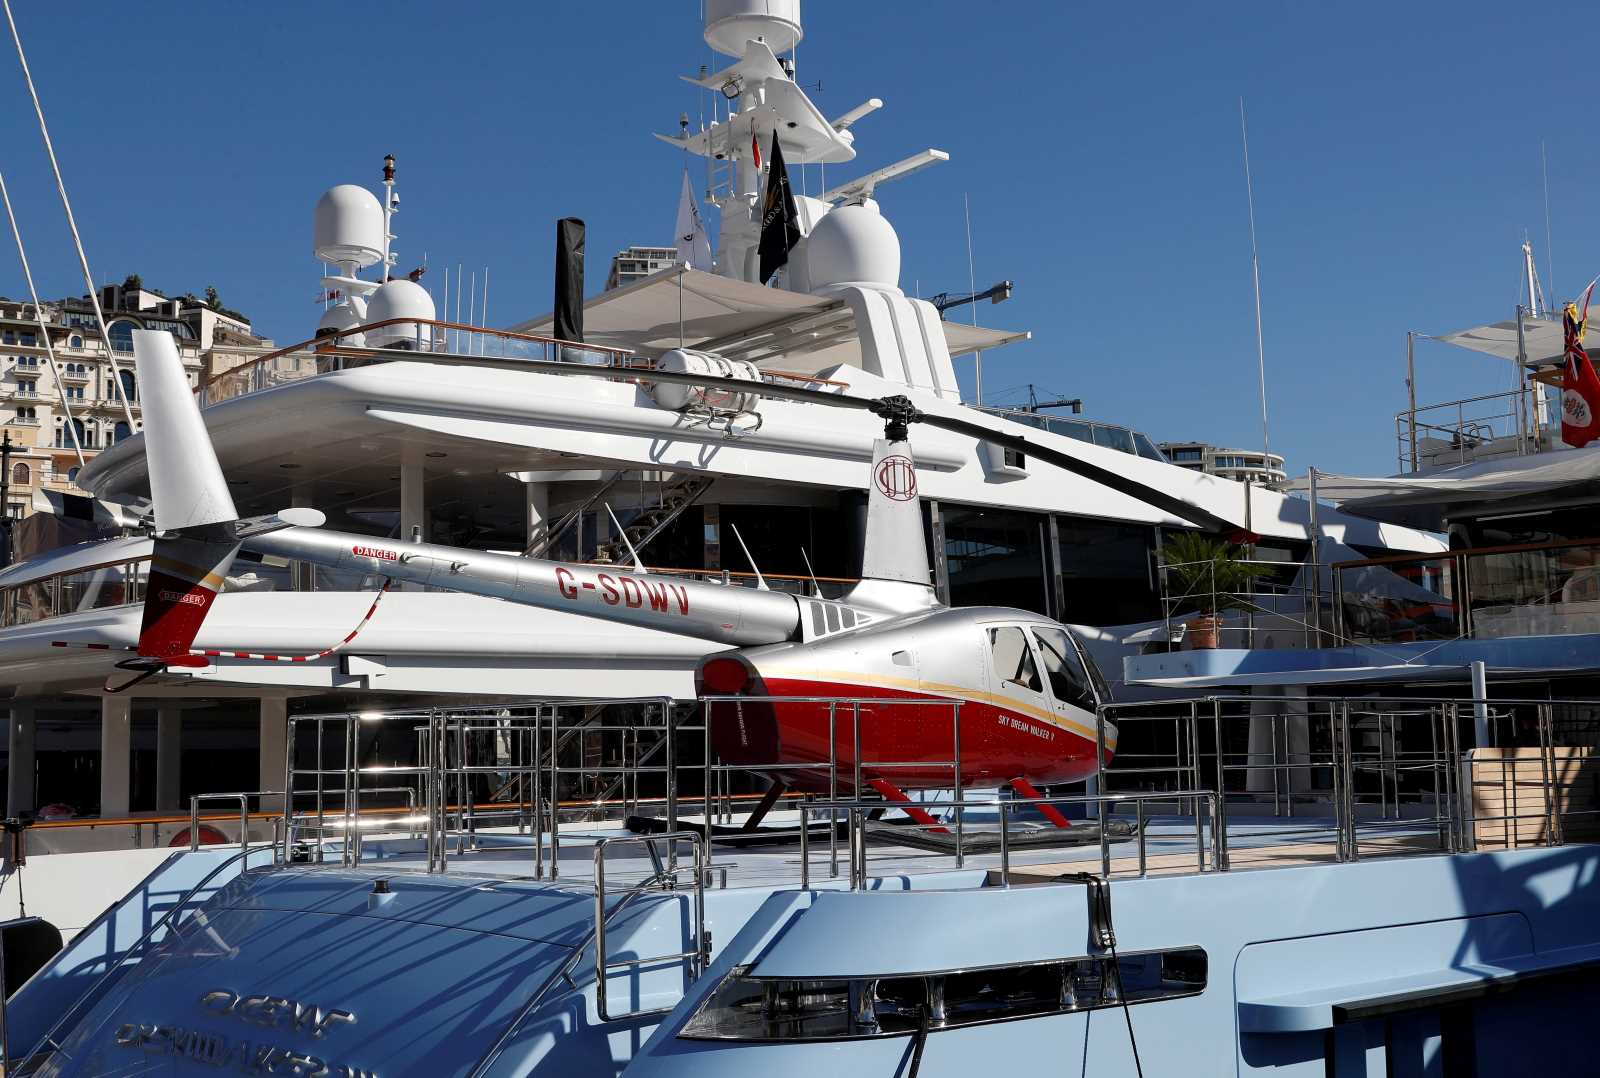 Helikopter auf Luxusyacht 2018 bei Bootsausstellung in Monaco.